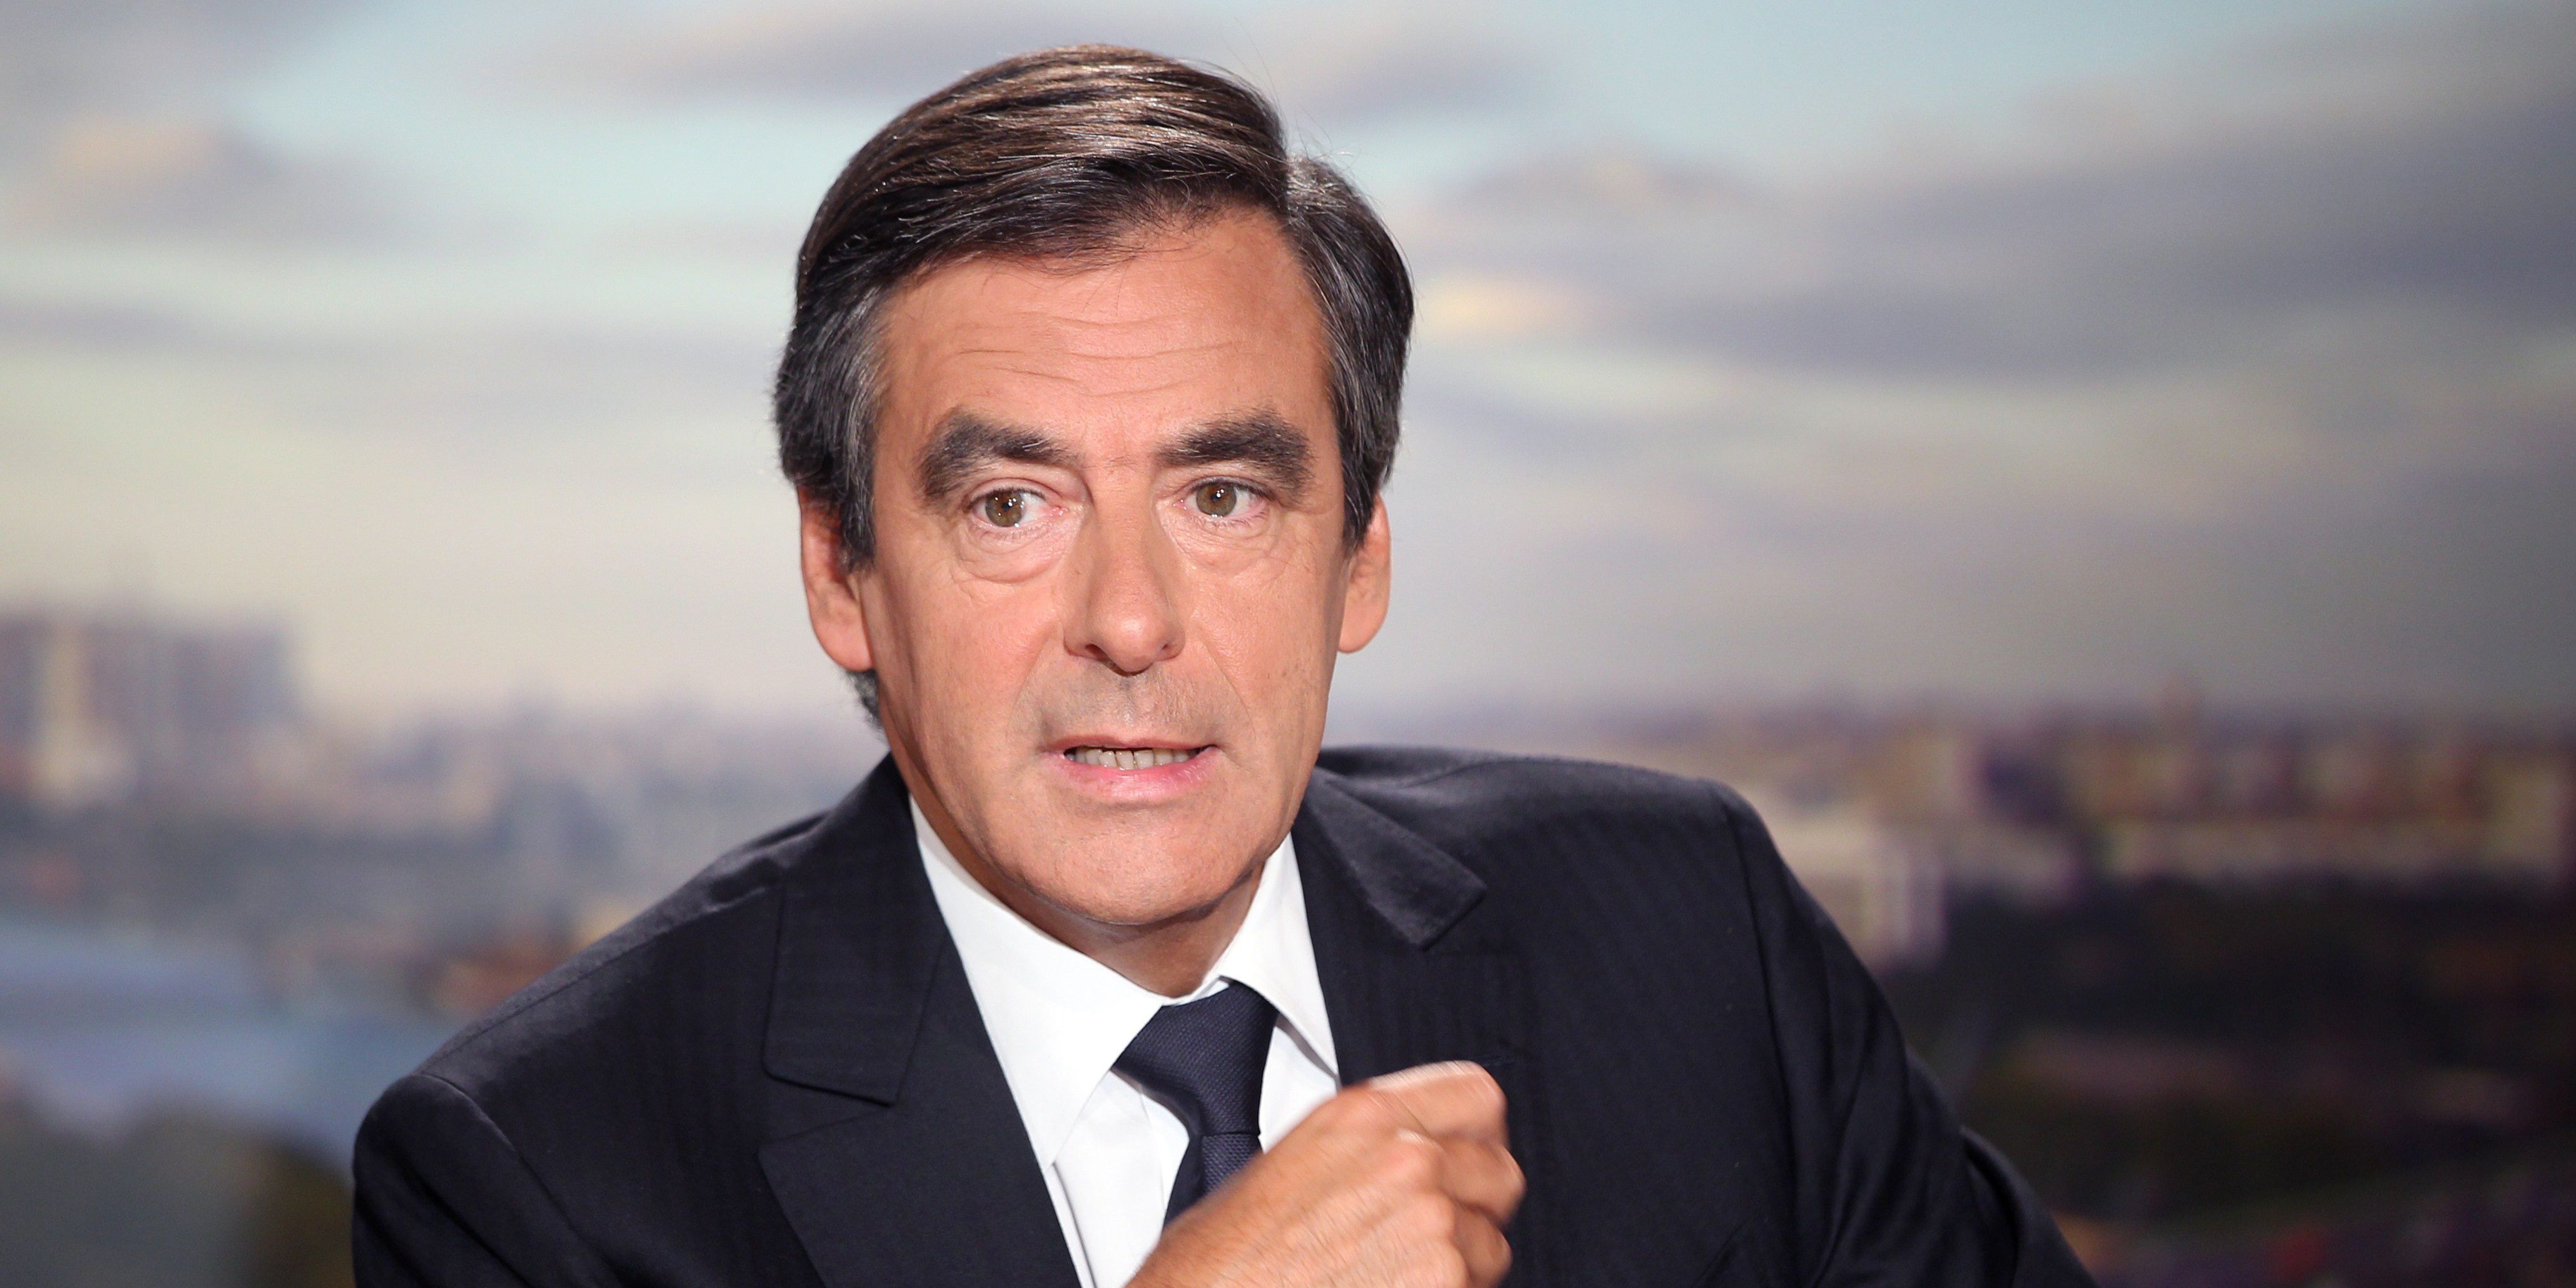 Il vincitore delle primarie francesi François Fillon